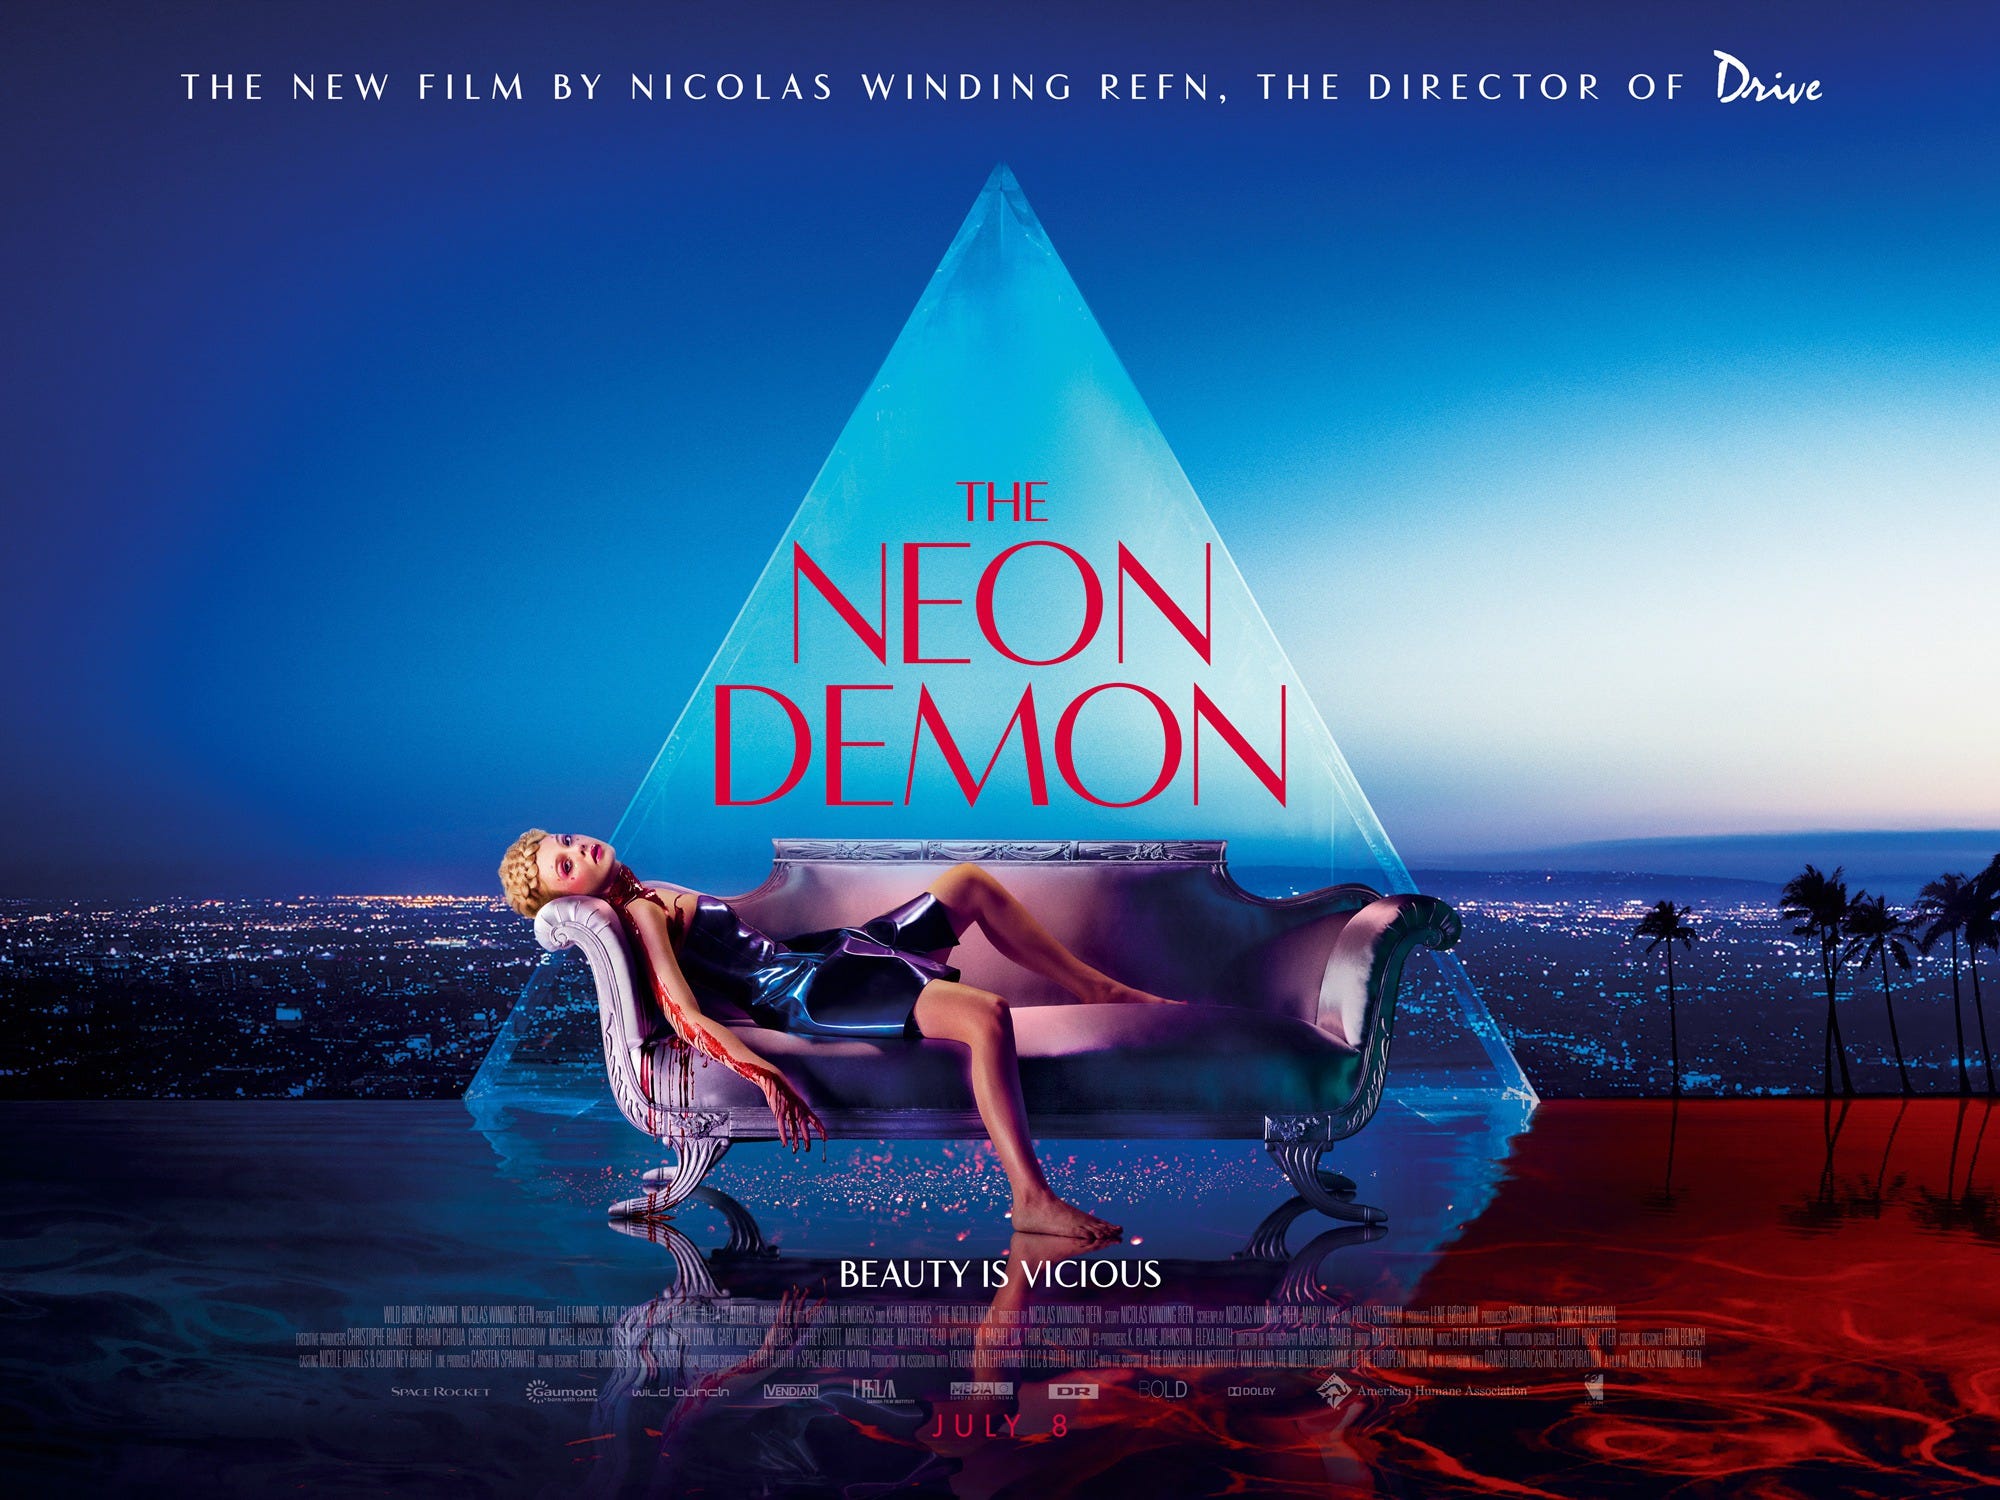 Nicolas Winding Refn is THE NEON DEMON - Applaudience - Medium